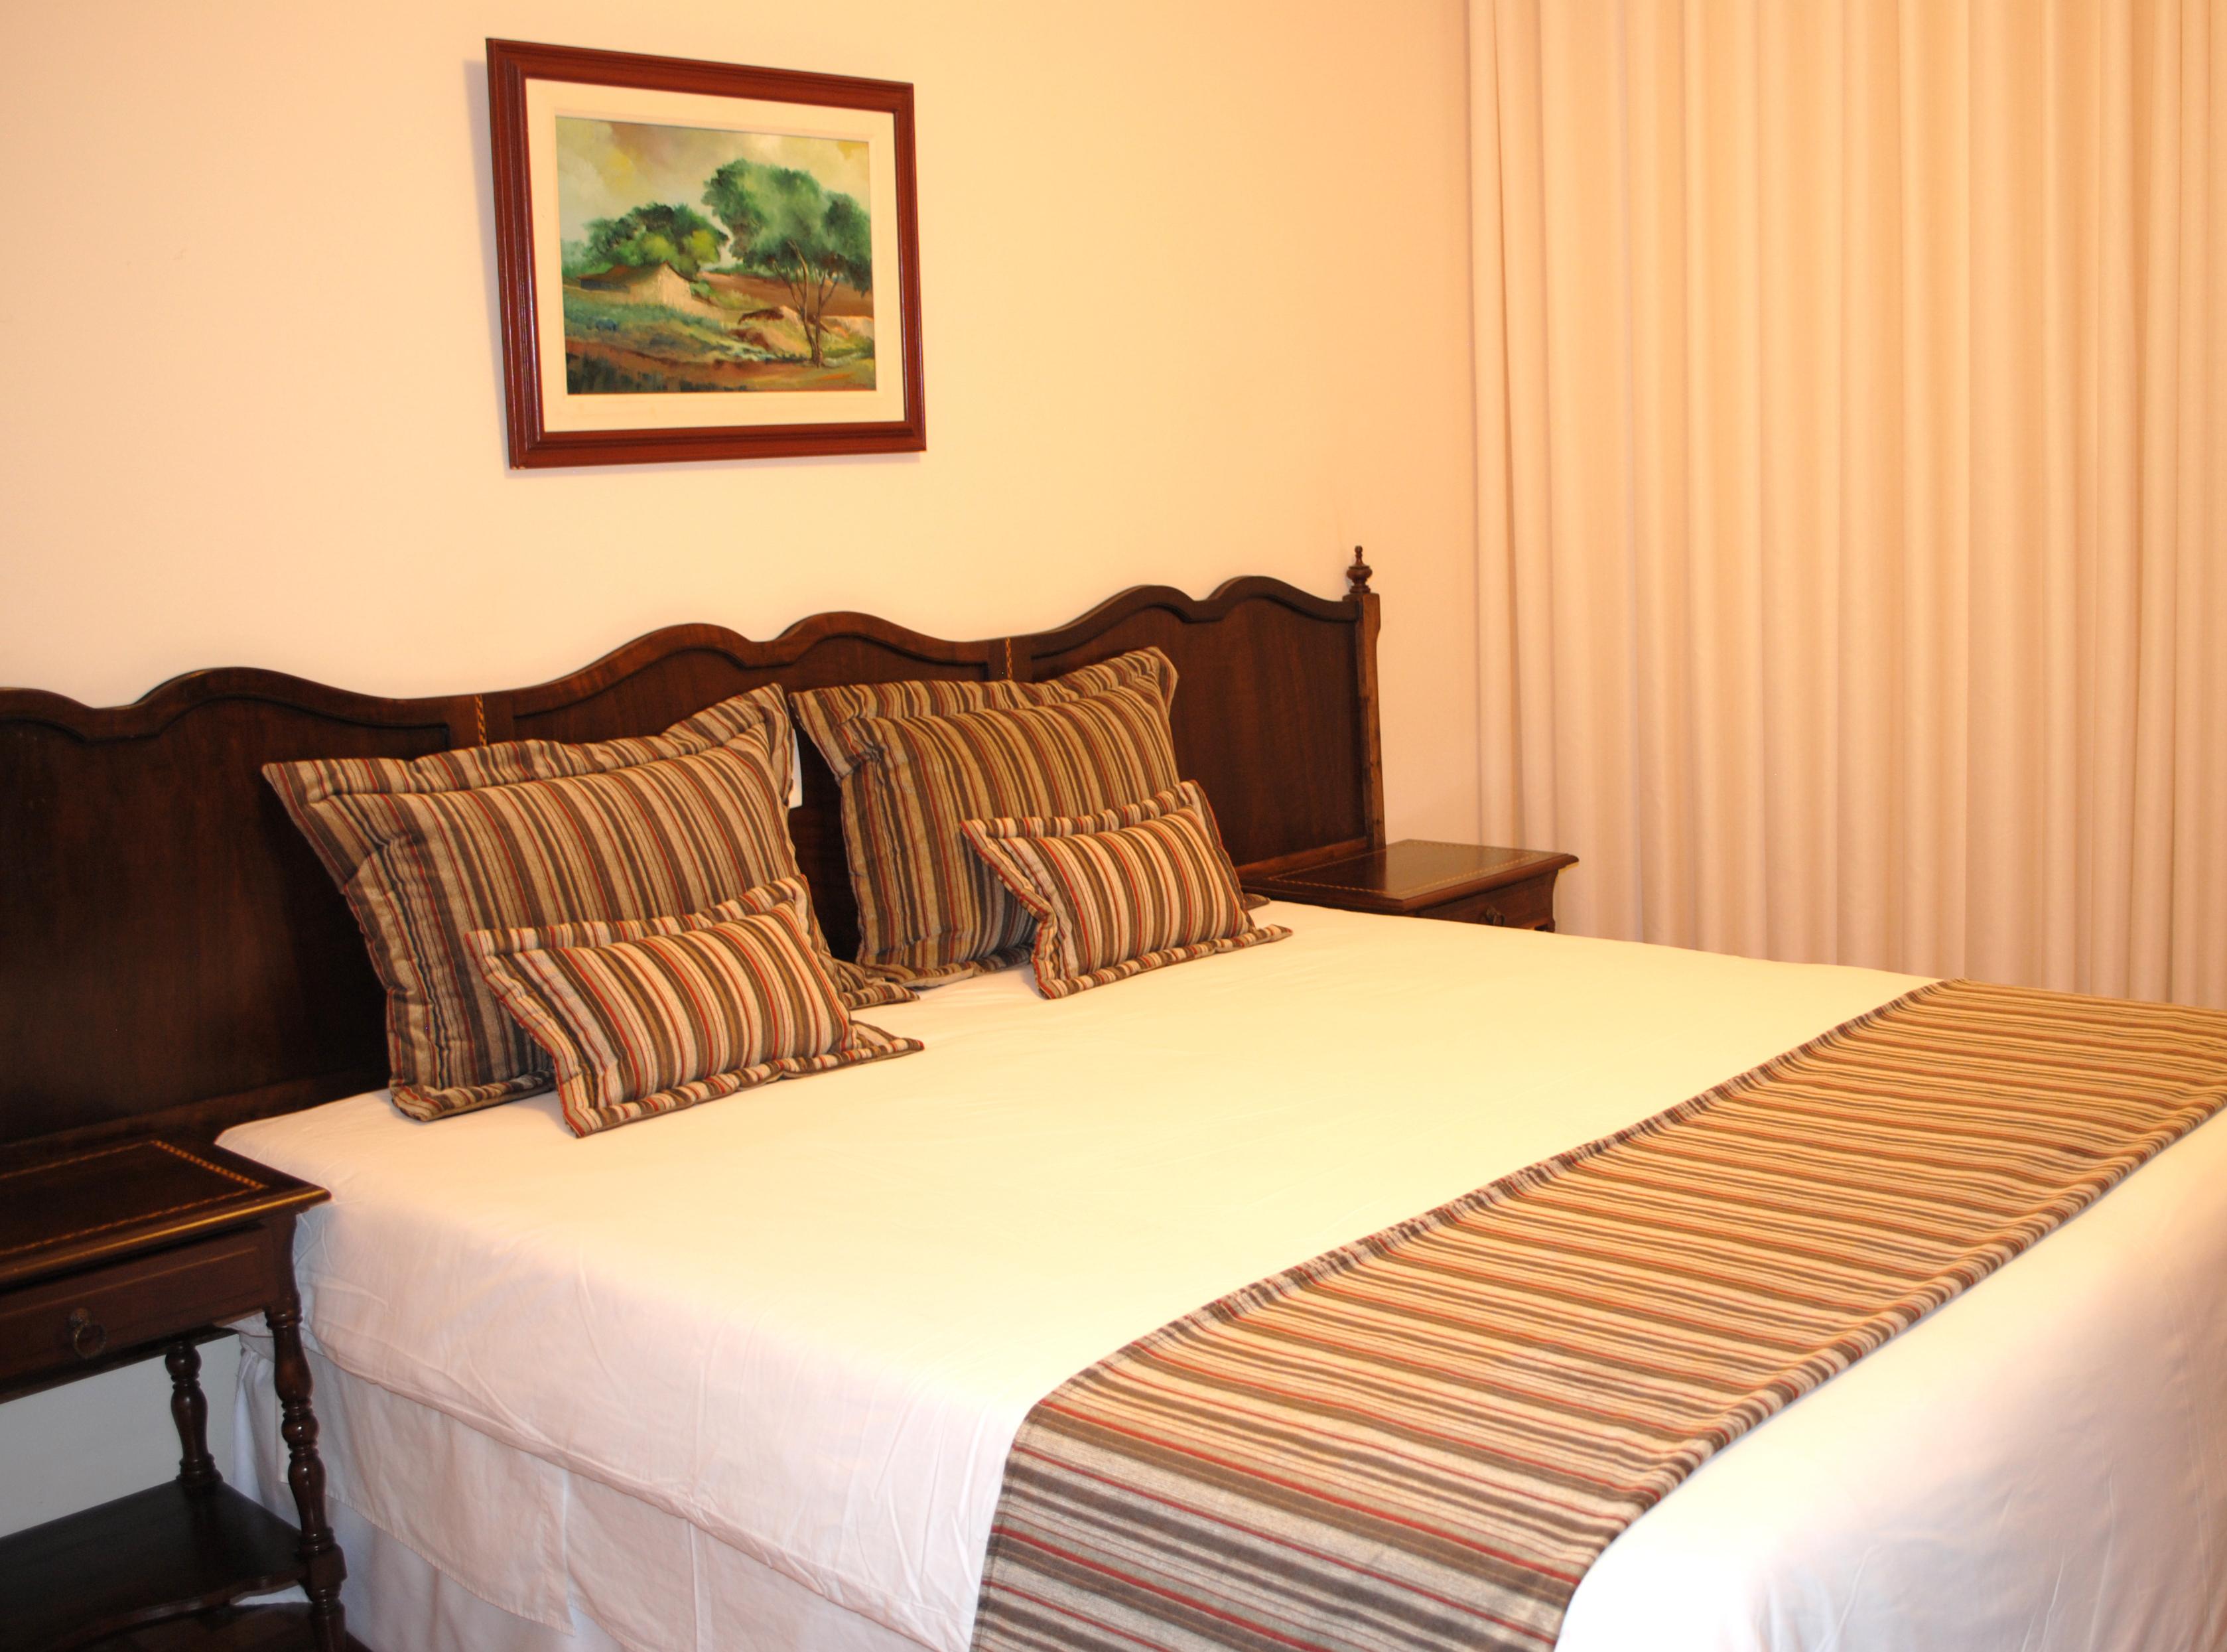 Hotel Gloria Resort & Convention Caxambu Exterior photo